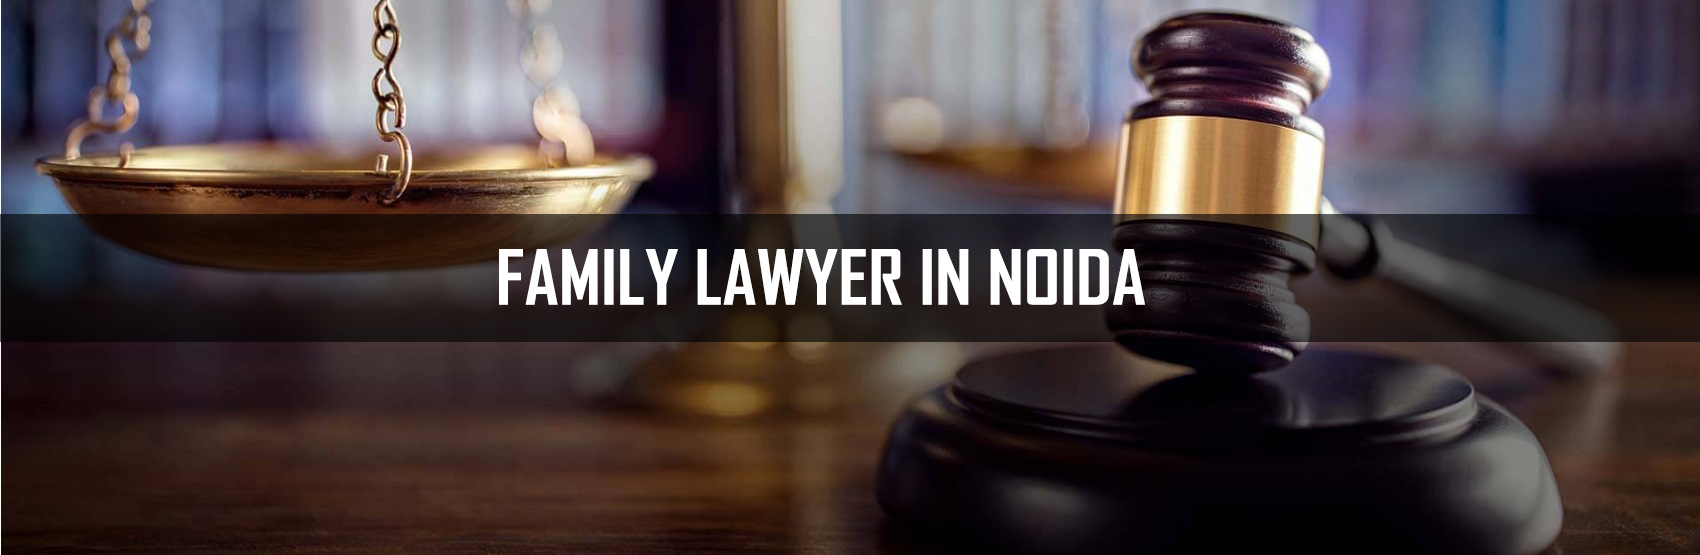 Family Lawyer in Noida, Greater Noida, Ghaziabad, Meerut & Hapur